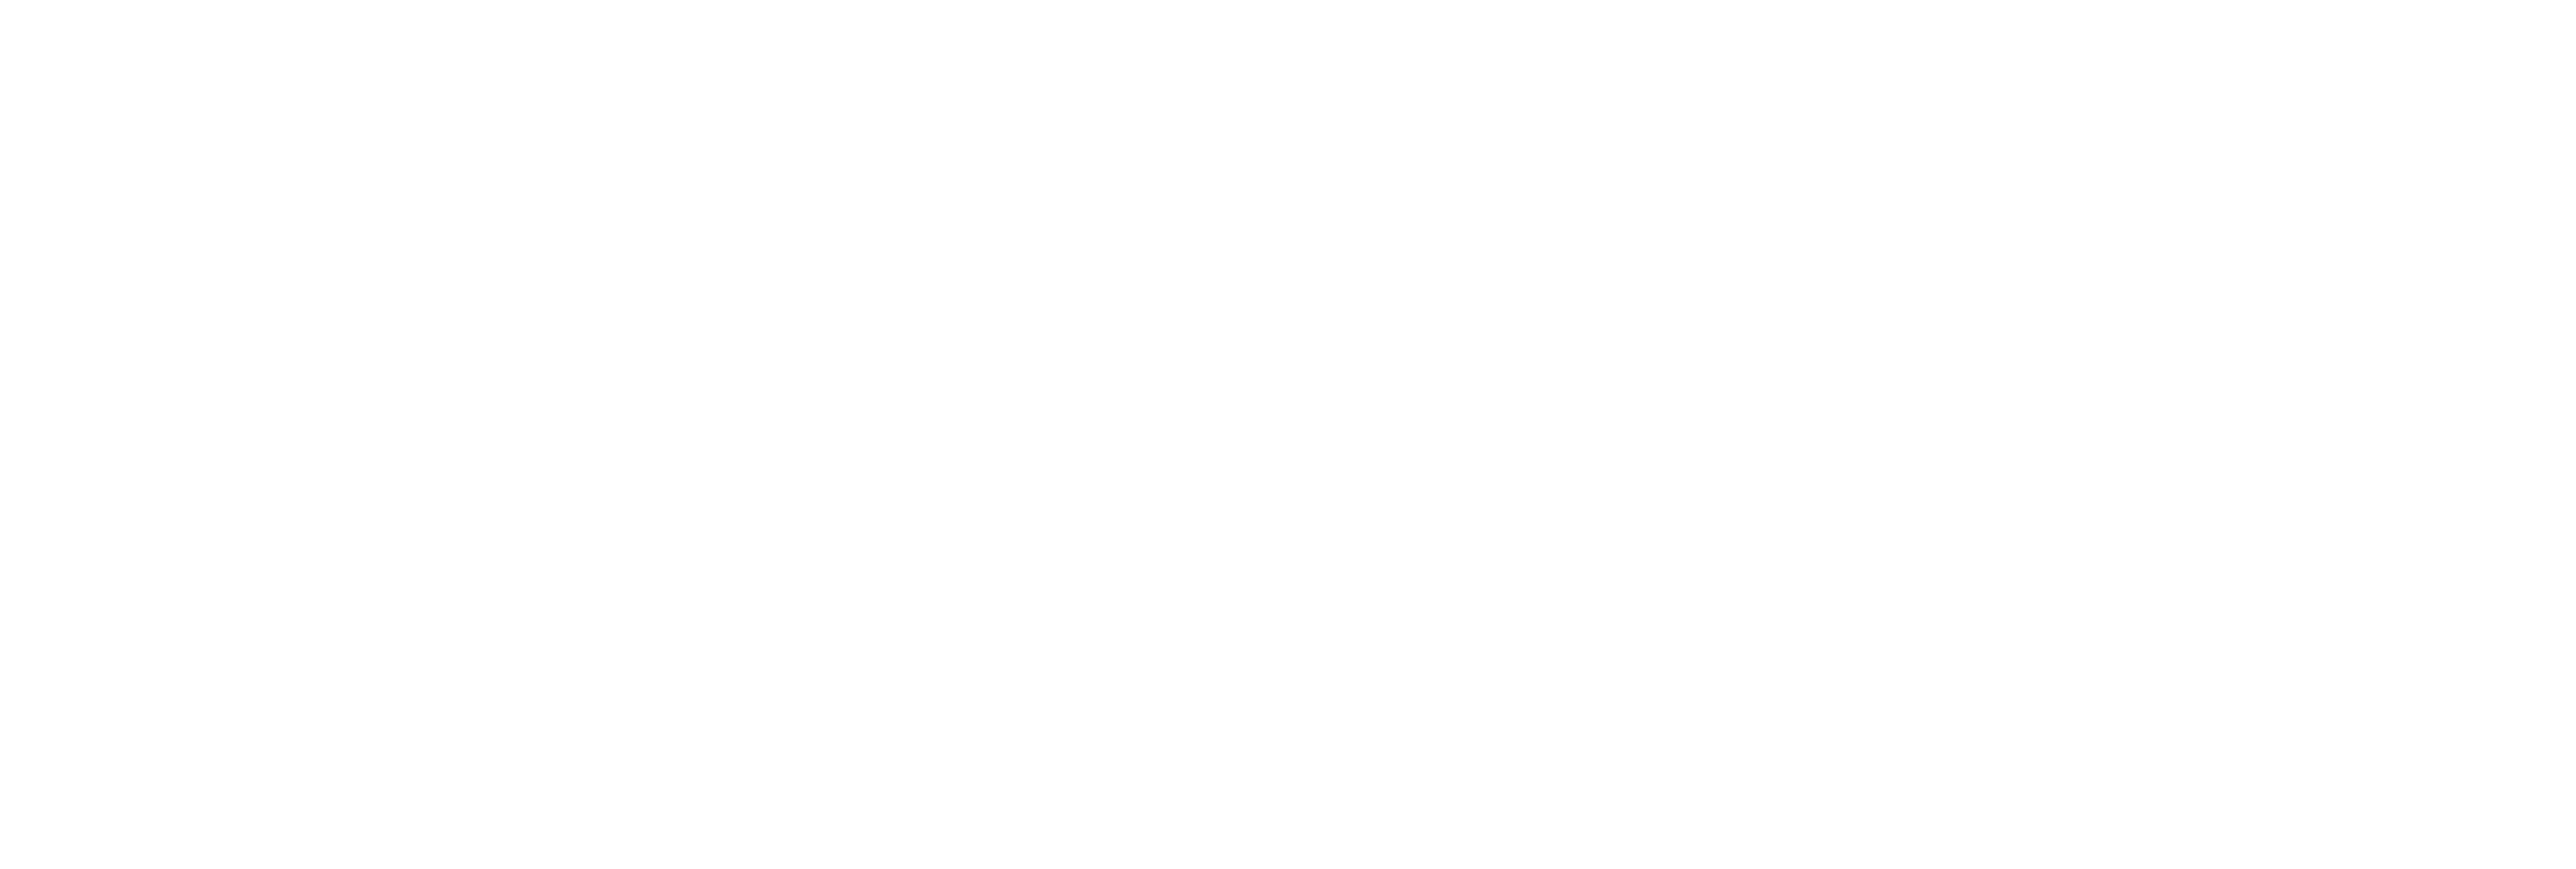 Oddy Logo - Horizontal - Inverse _Transparent_